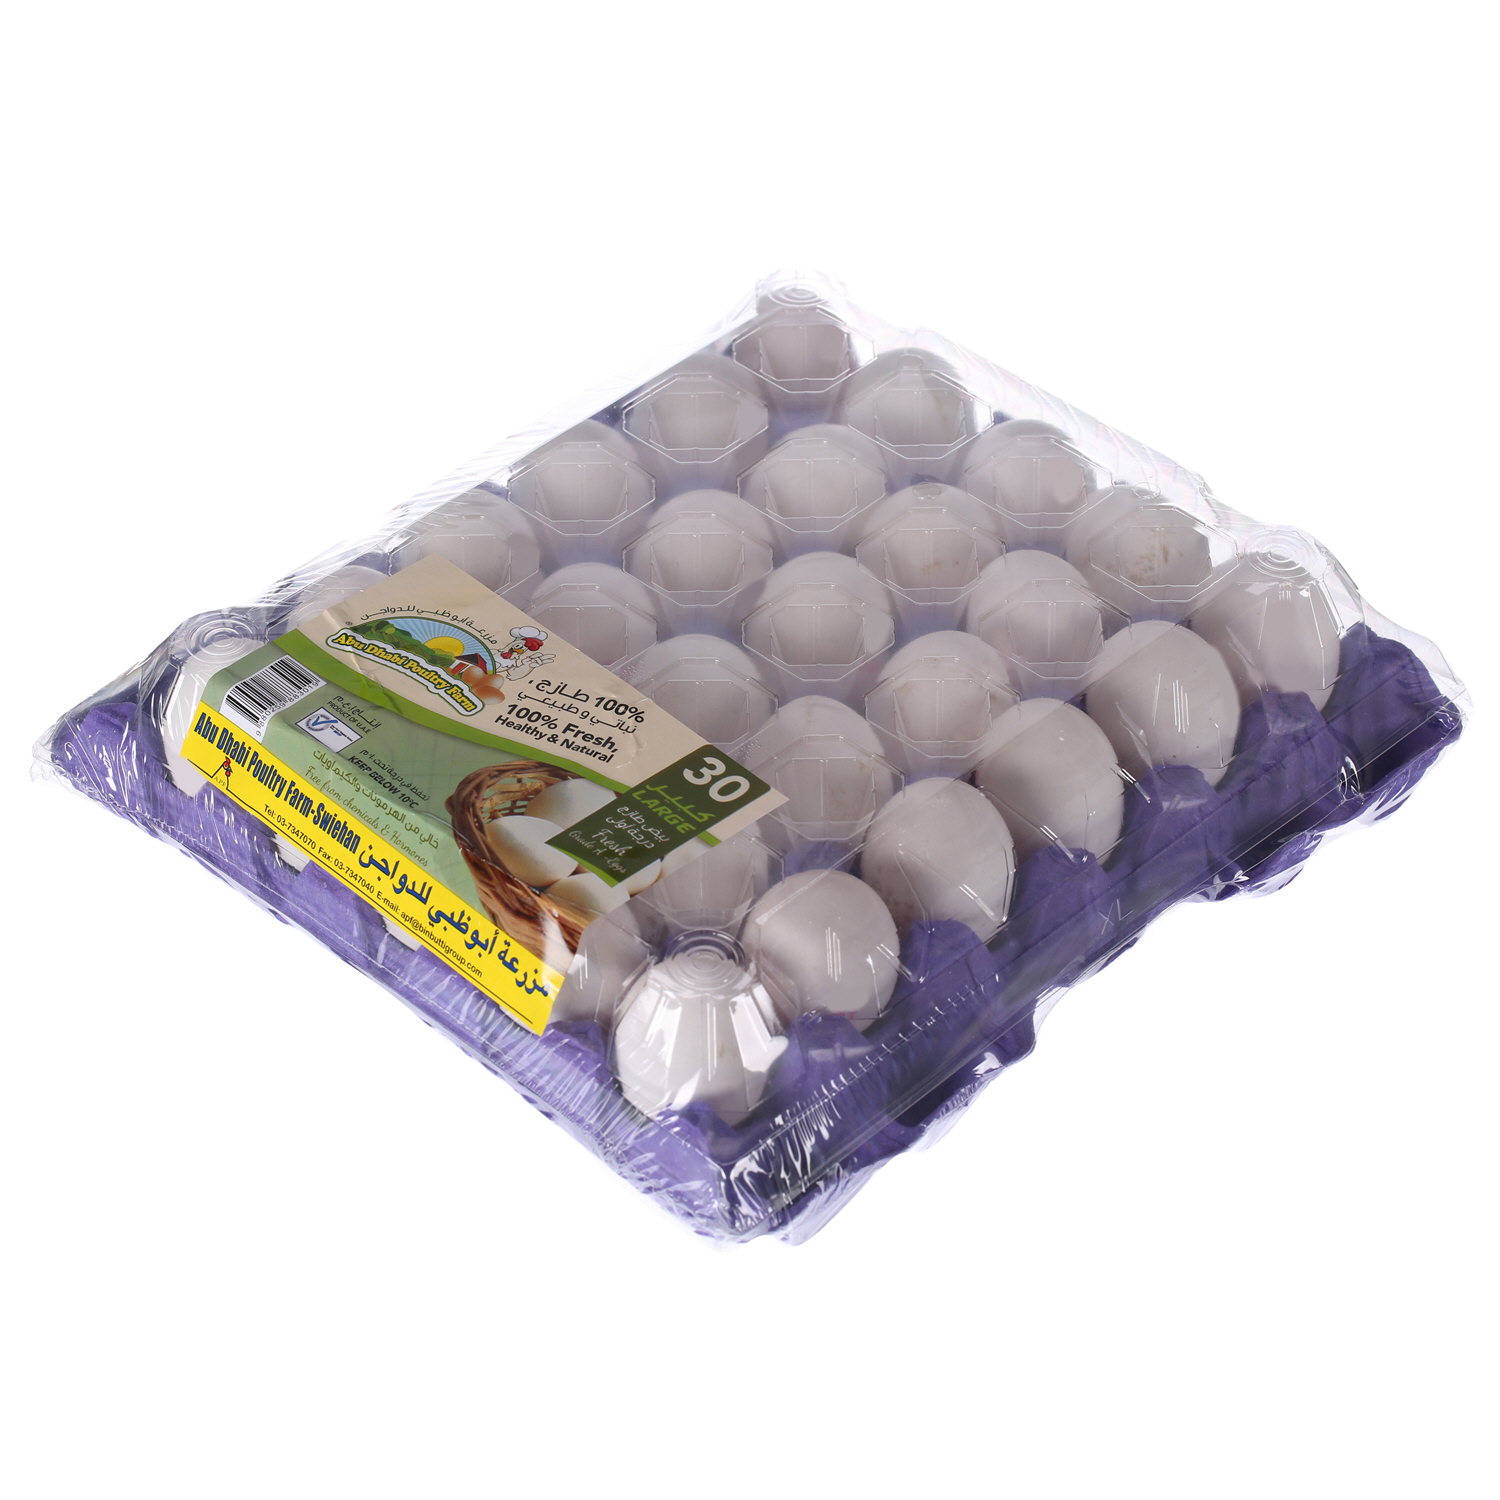 Abu Dhabi Fresh White Eggs Large 30 Pack